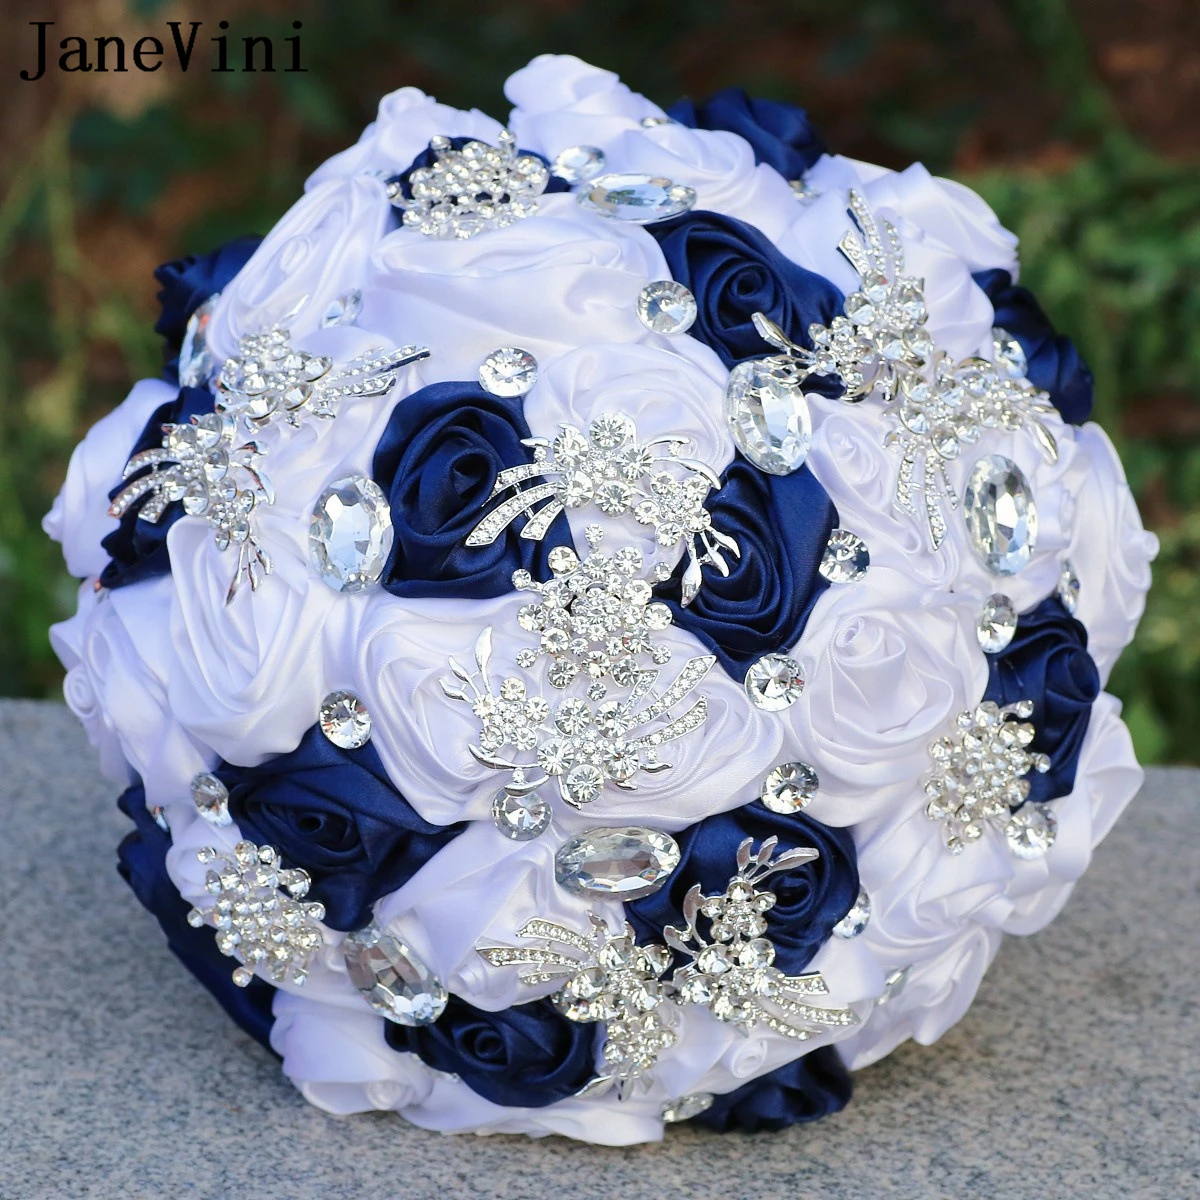 

JaneVini Elegant Navy Blue White Wedding Flowers Bridal Bouquets with Crystals Rhinestones Luxury Satin Rose Wedding Bouquet New